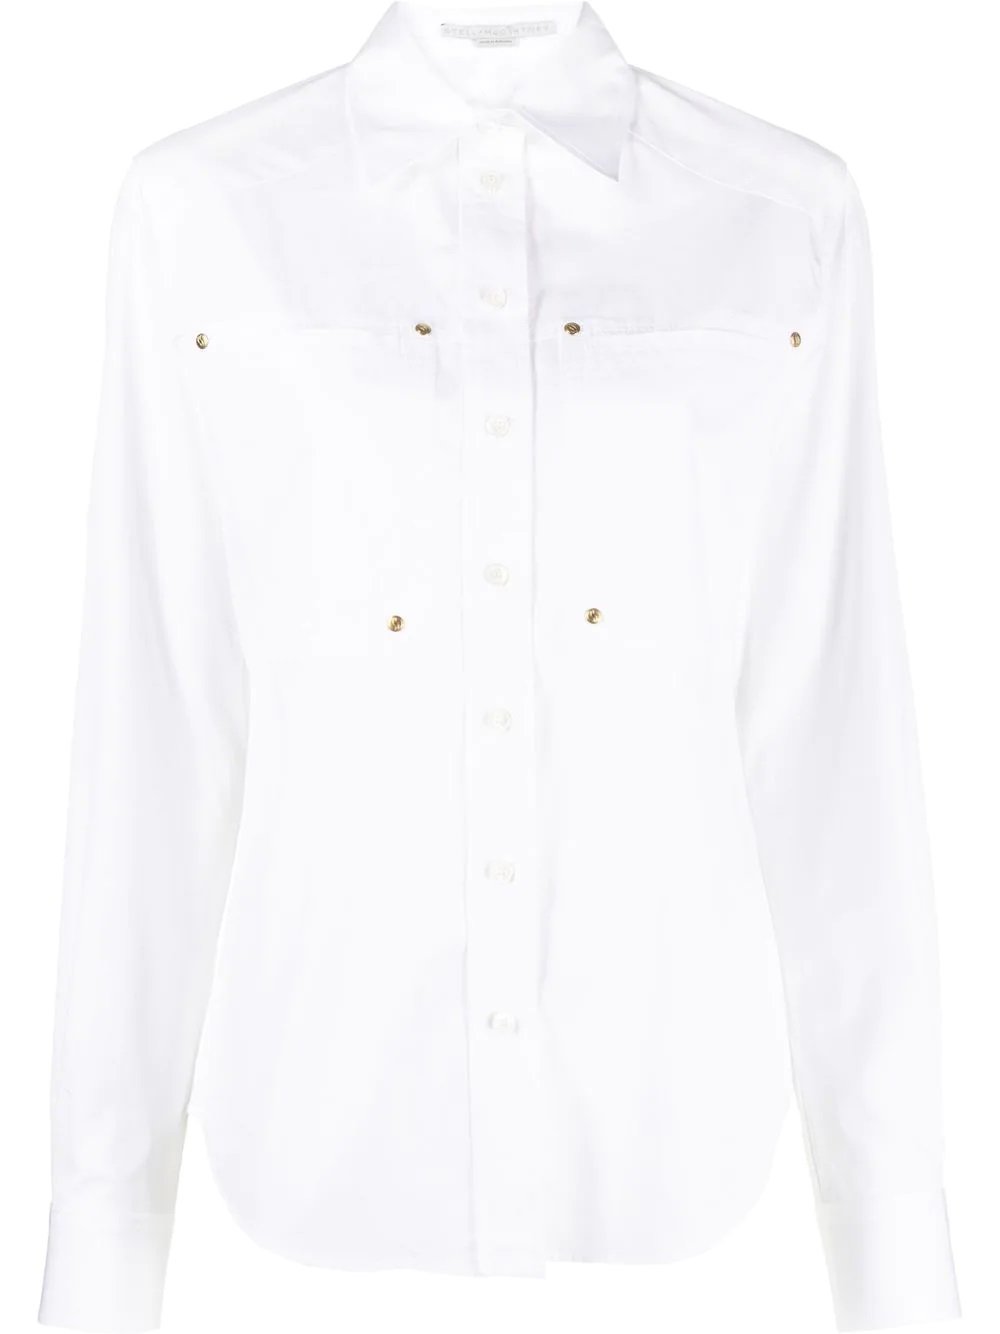 Stella McCartney Patch-Pocket Workwear Shirt in White.jpg